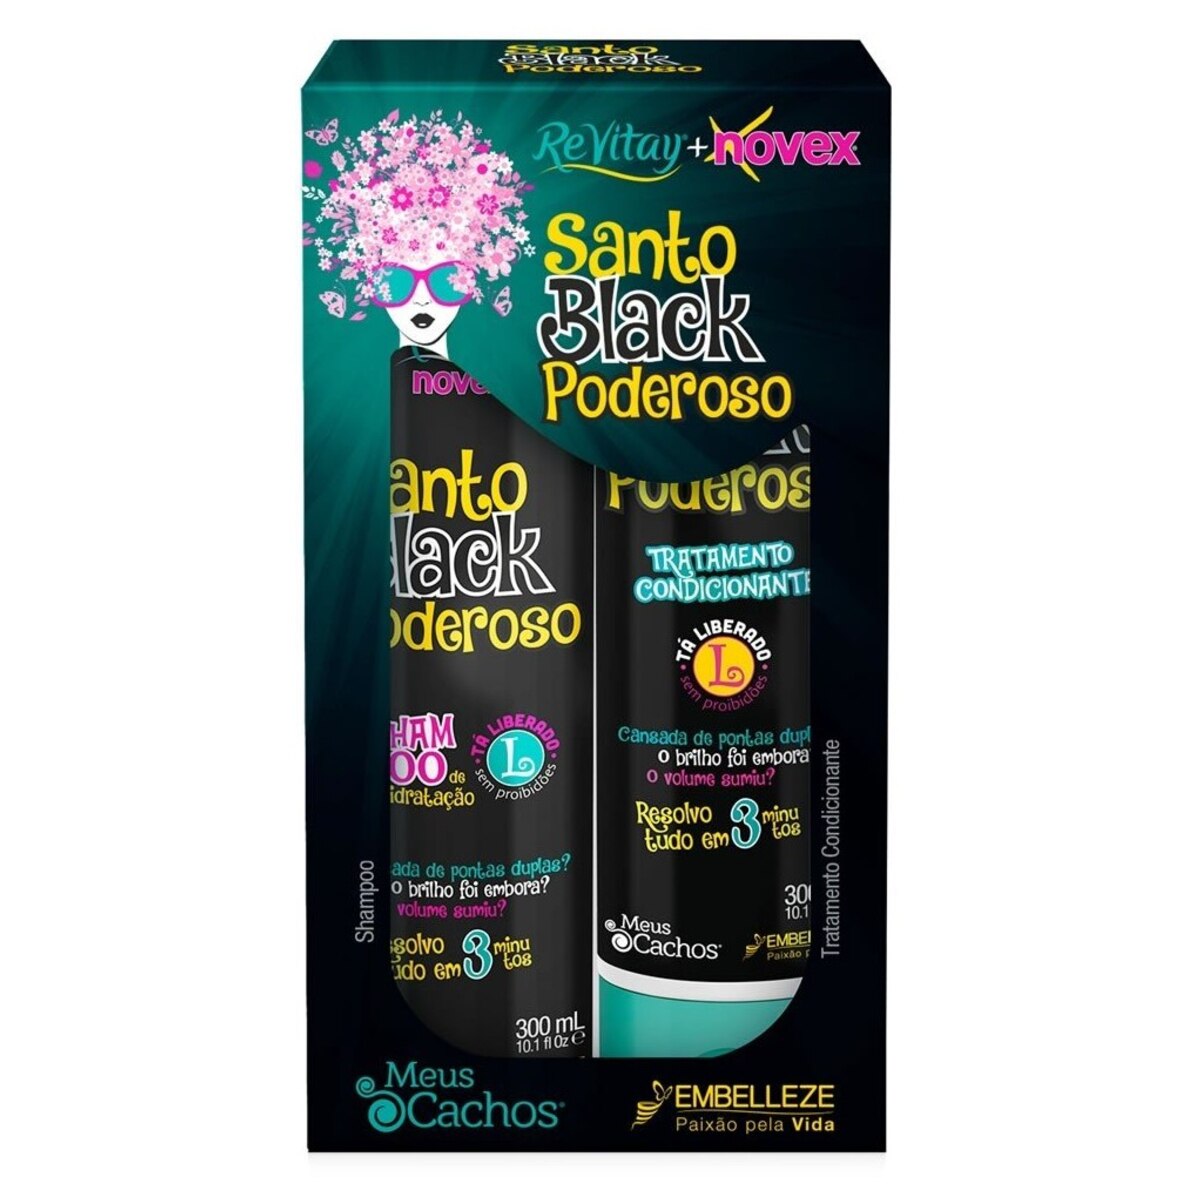 Kit Shampoo + Tratamento Condicionante Revitay Novex Santo Black Poderoso 300ml